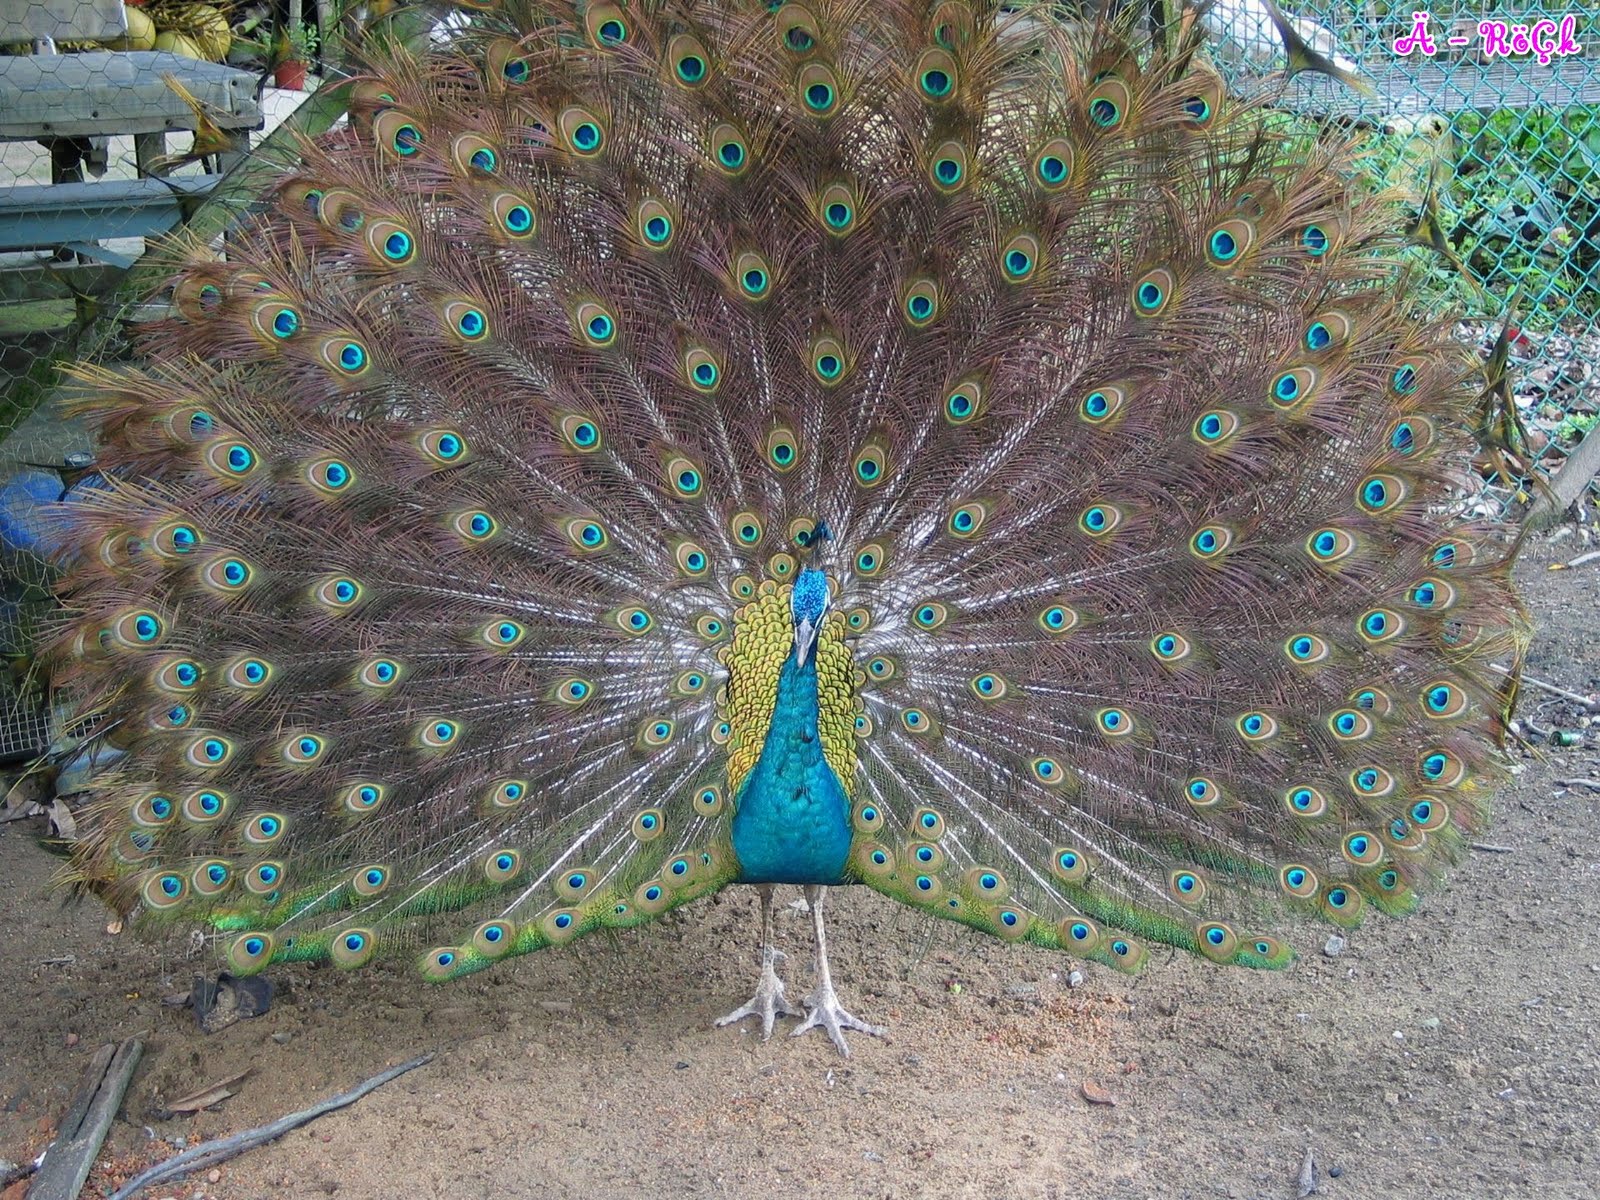 Just Wallpaper Inside: Peacock Wallpaper